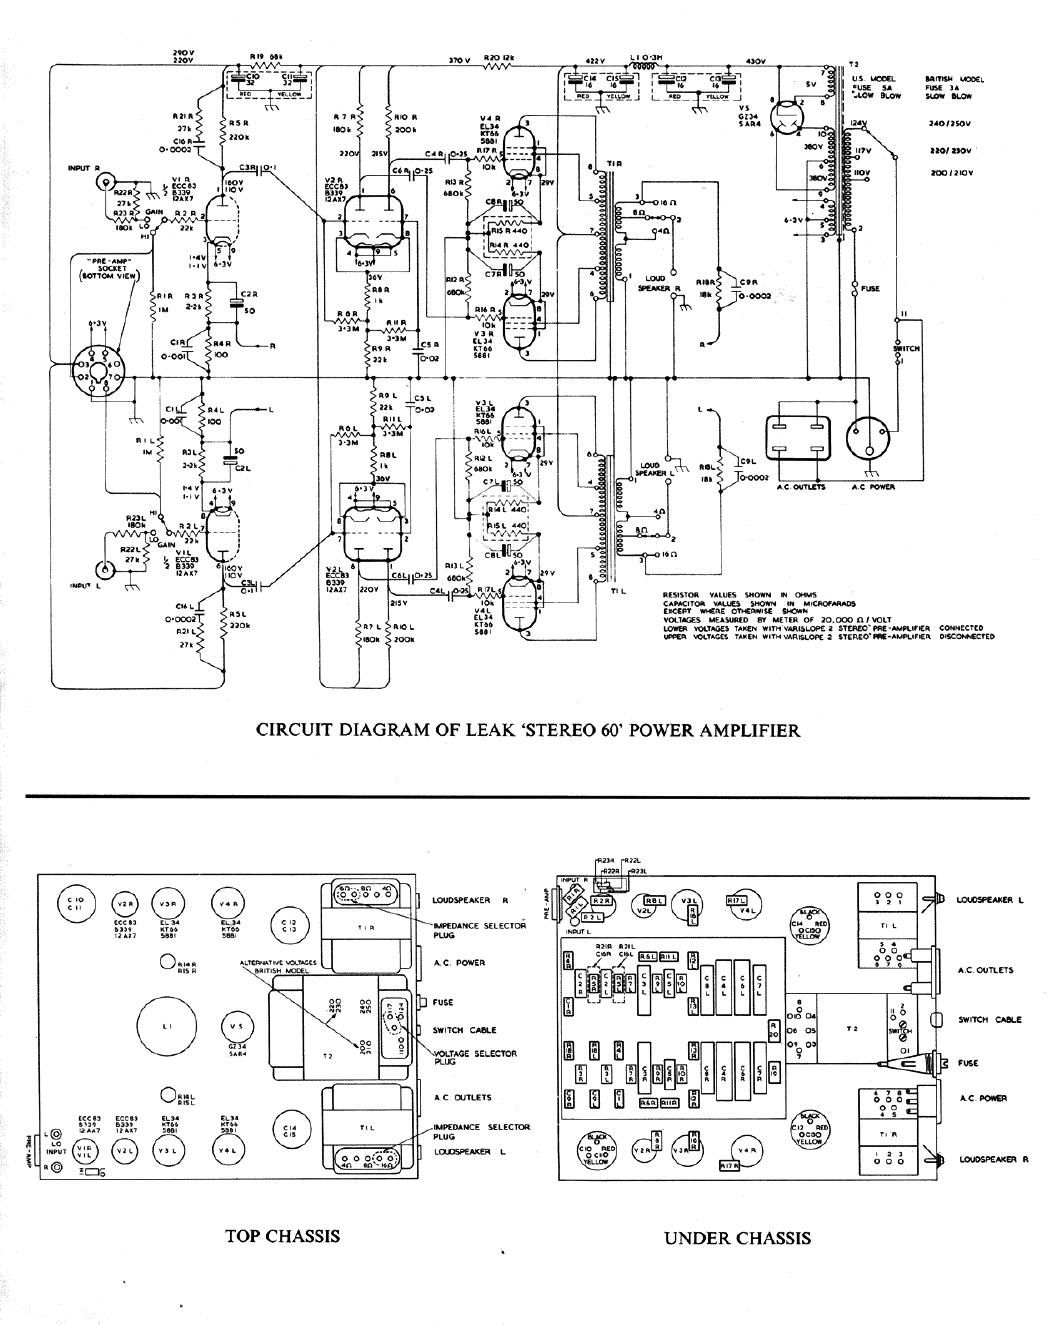 leak stereo 60 schematic